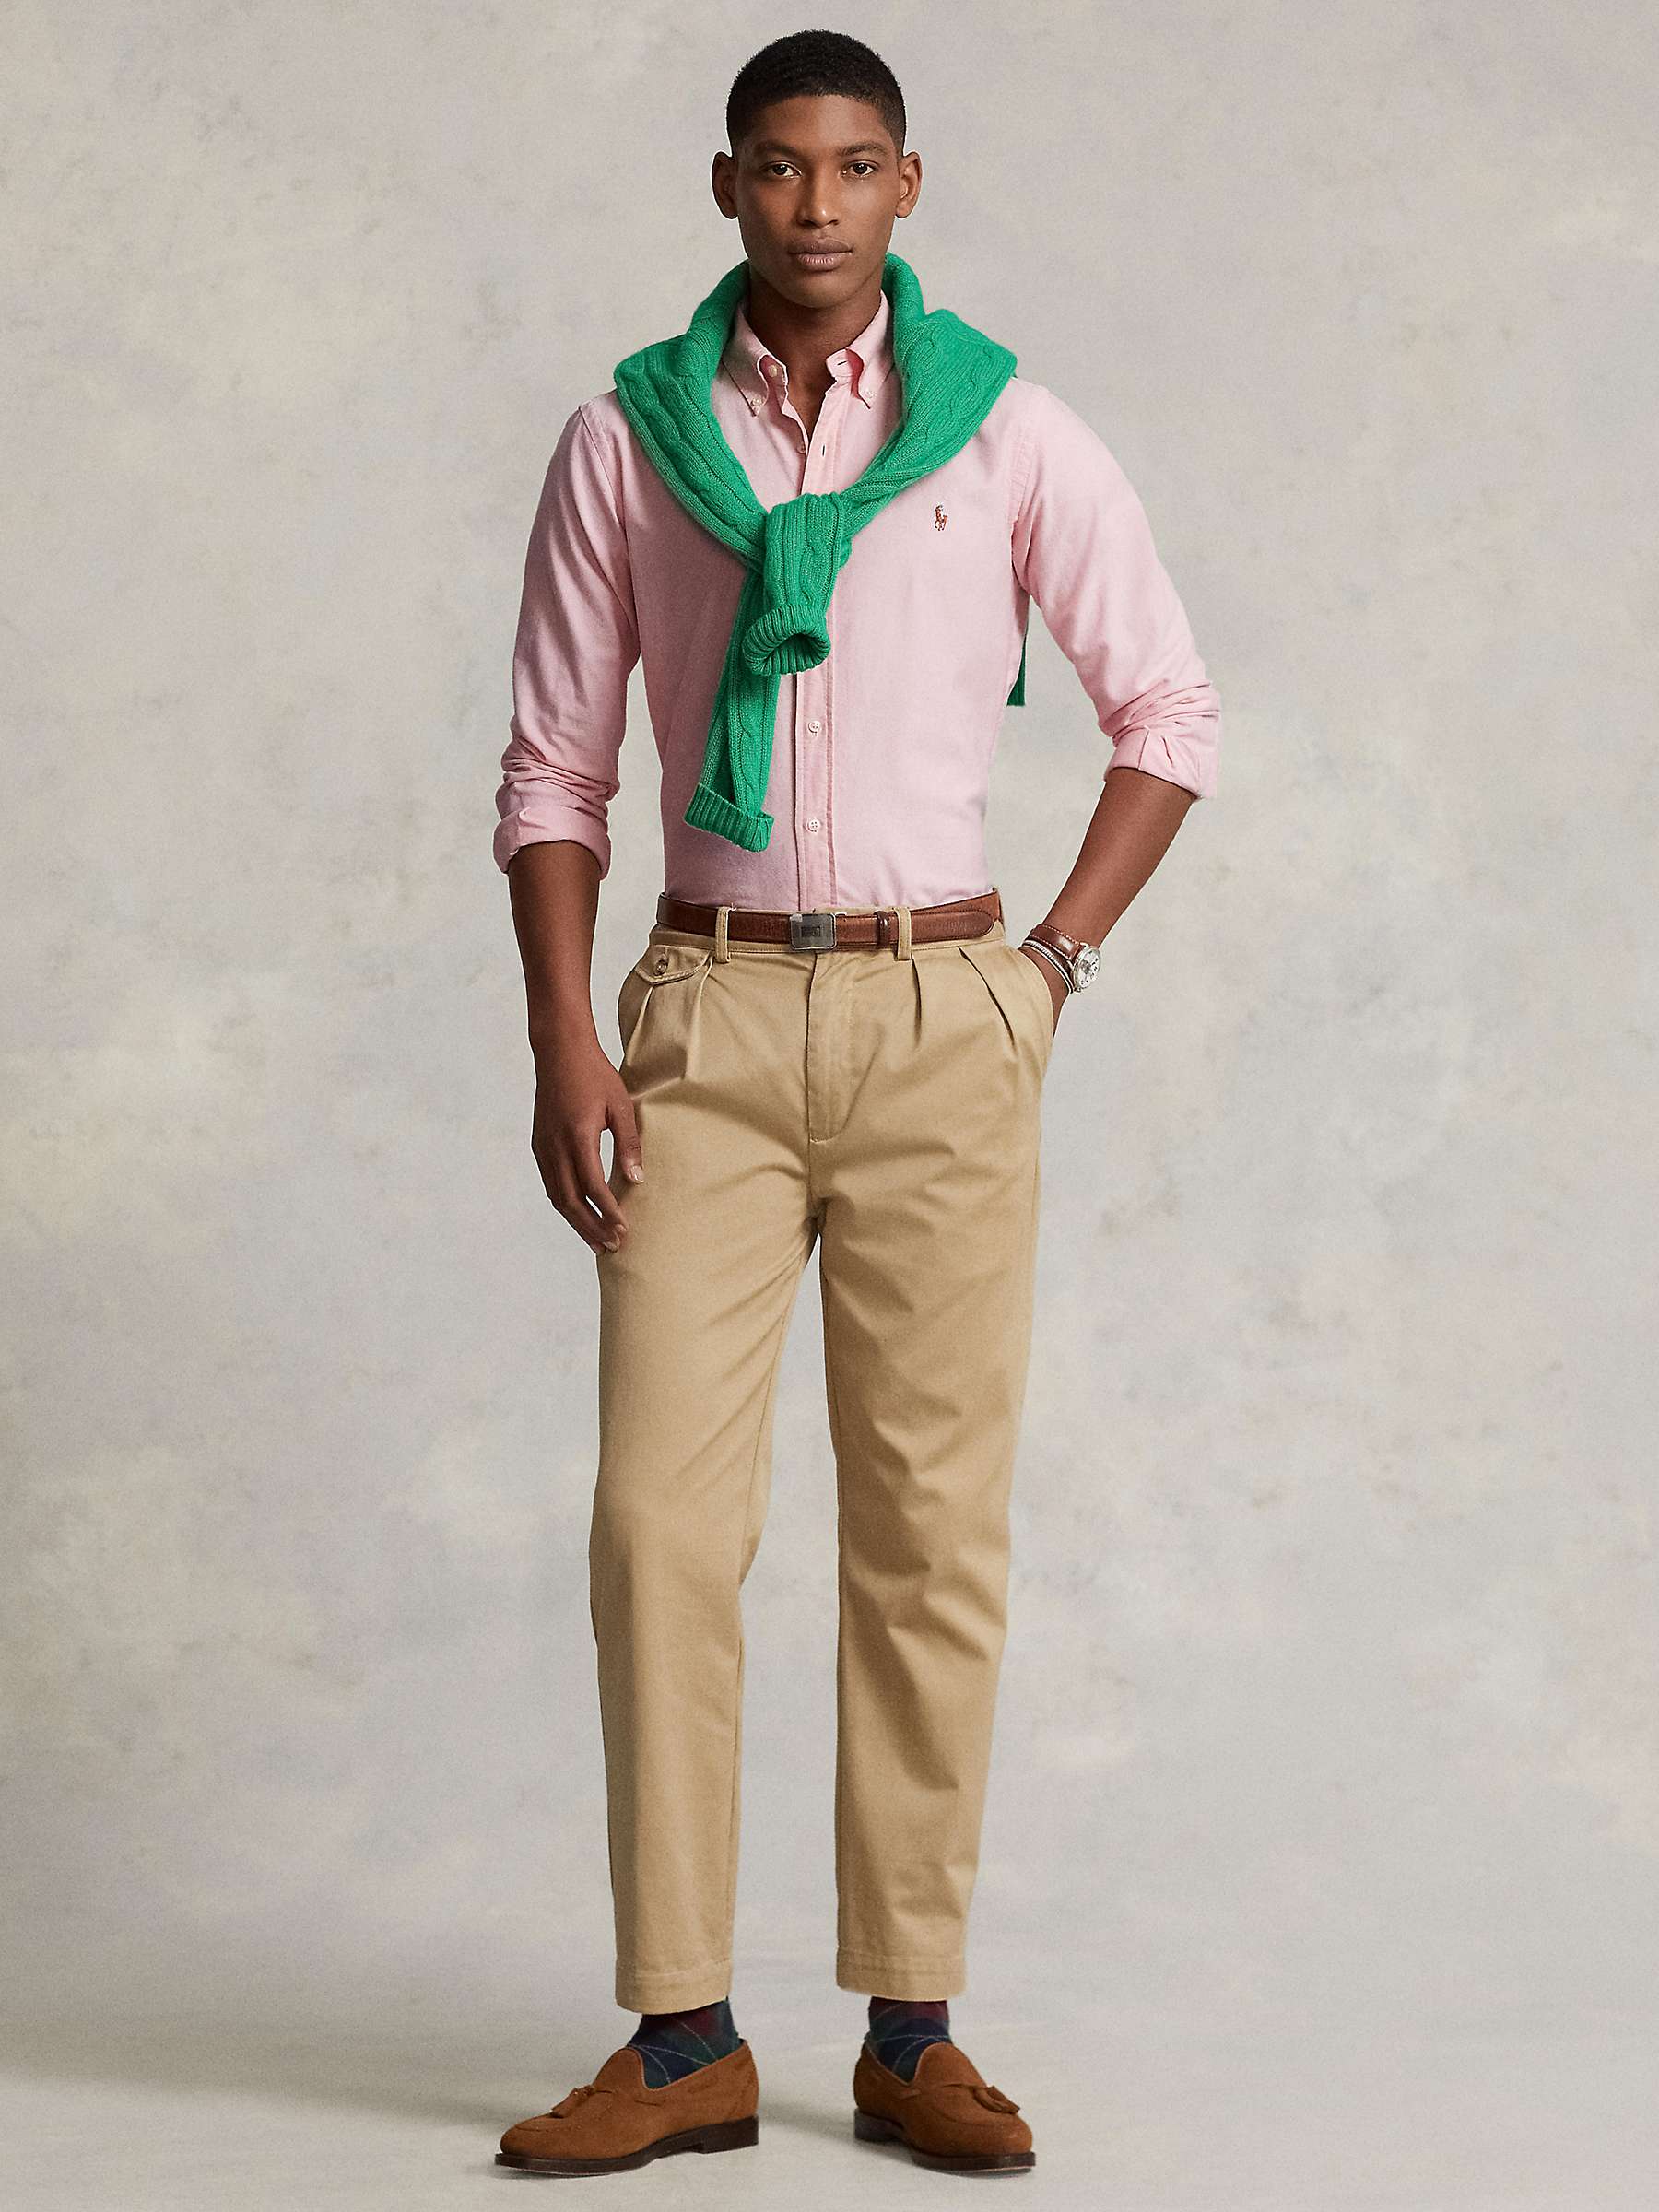 Buy Polo Ralph Lauren Custom Fit Oxford Shirt Online at johnlewis.com